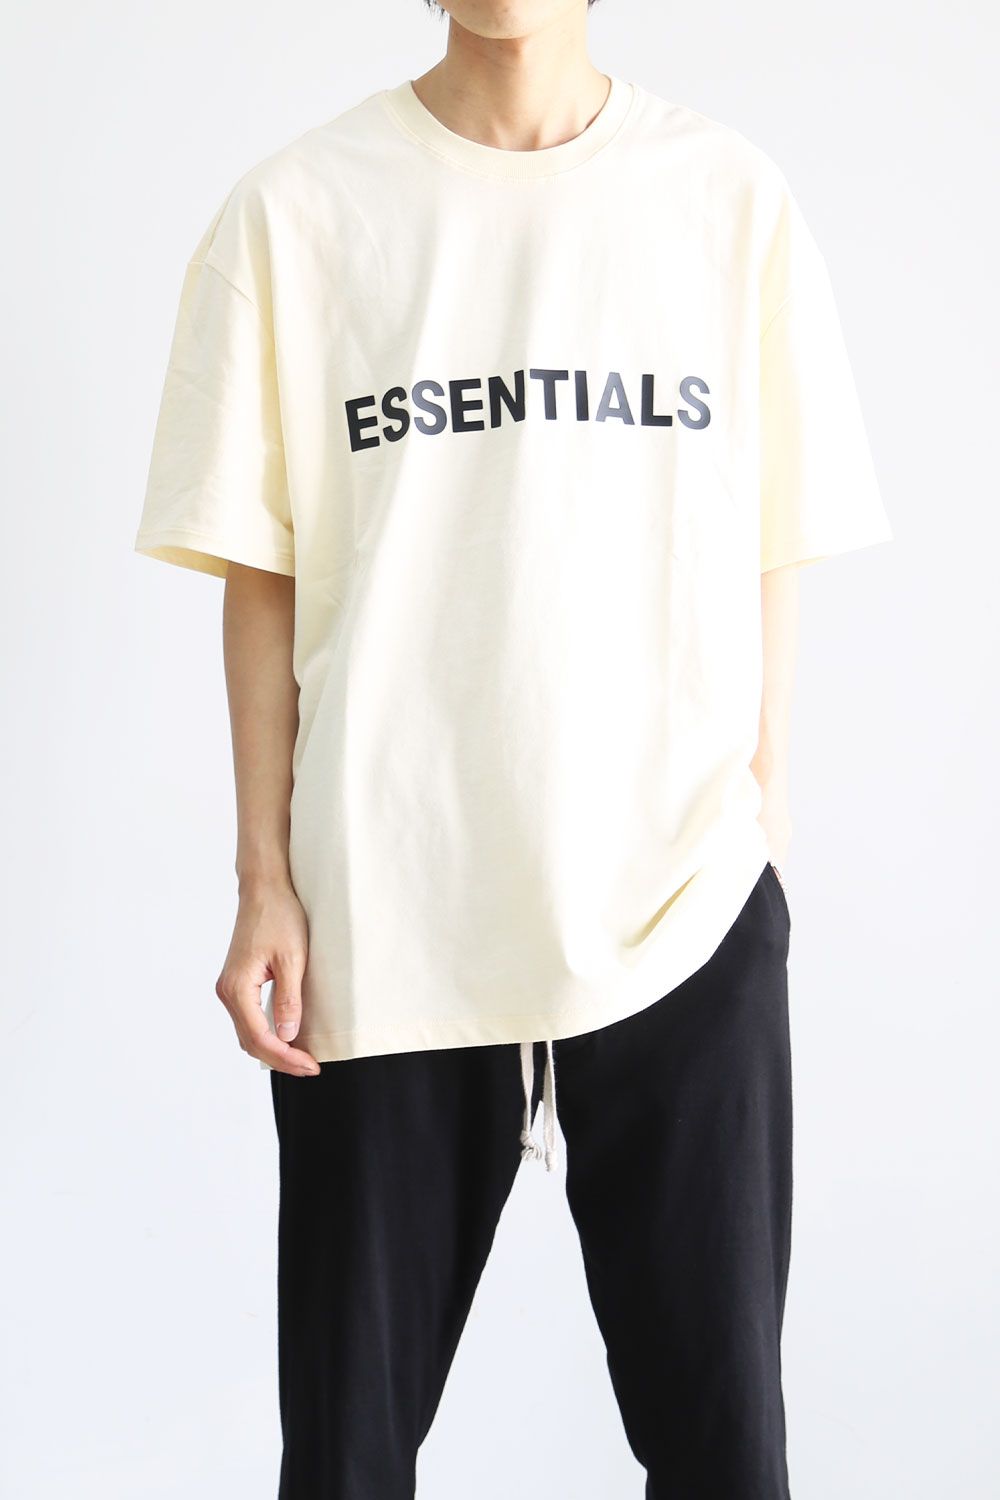 FOG ESSENTIALS フロントロゴ Tシャツ ピンク / Sサイズ